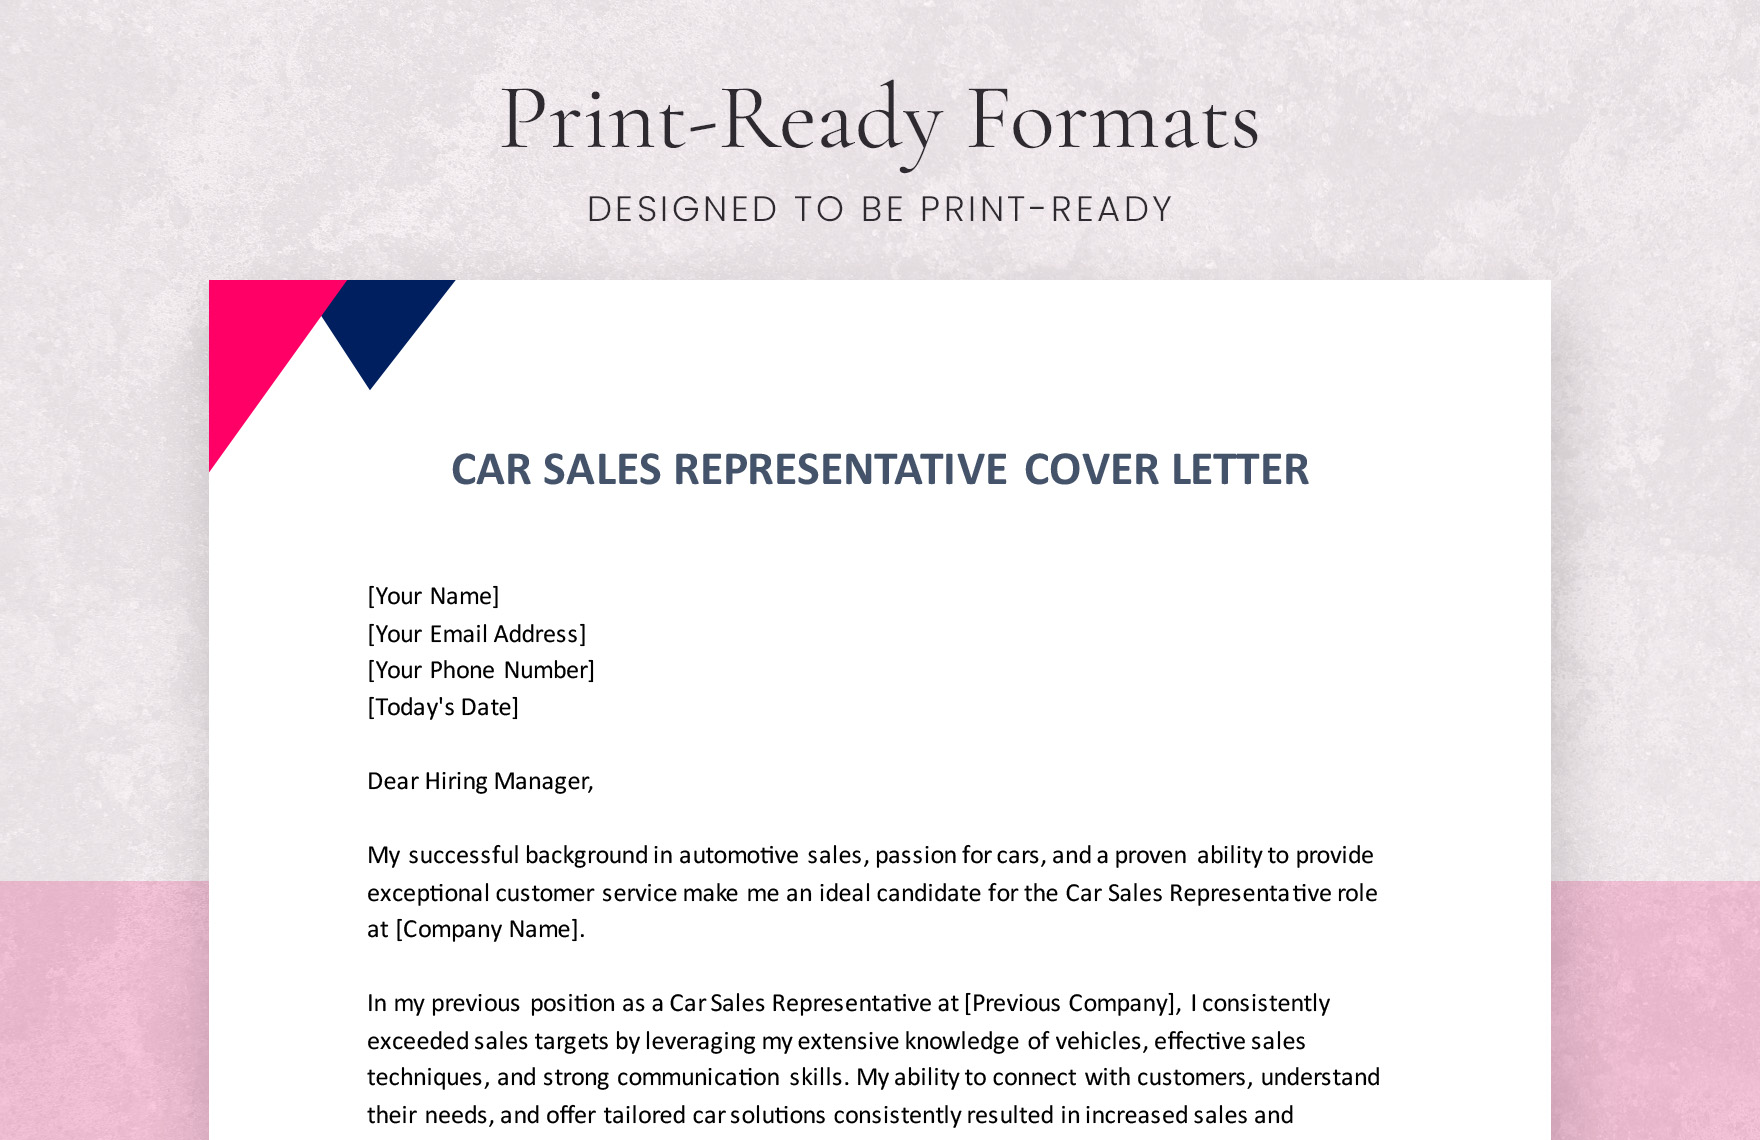 Car Sales Representative Cover Letter